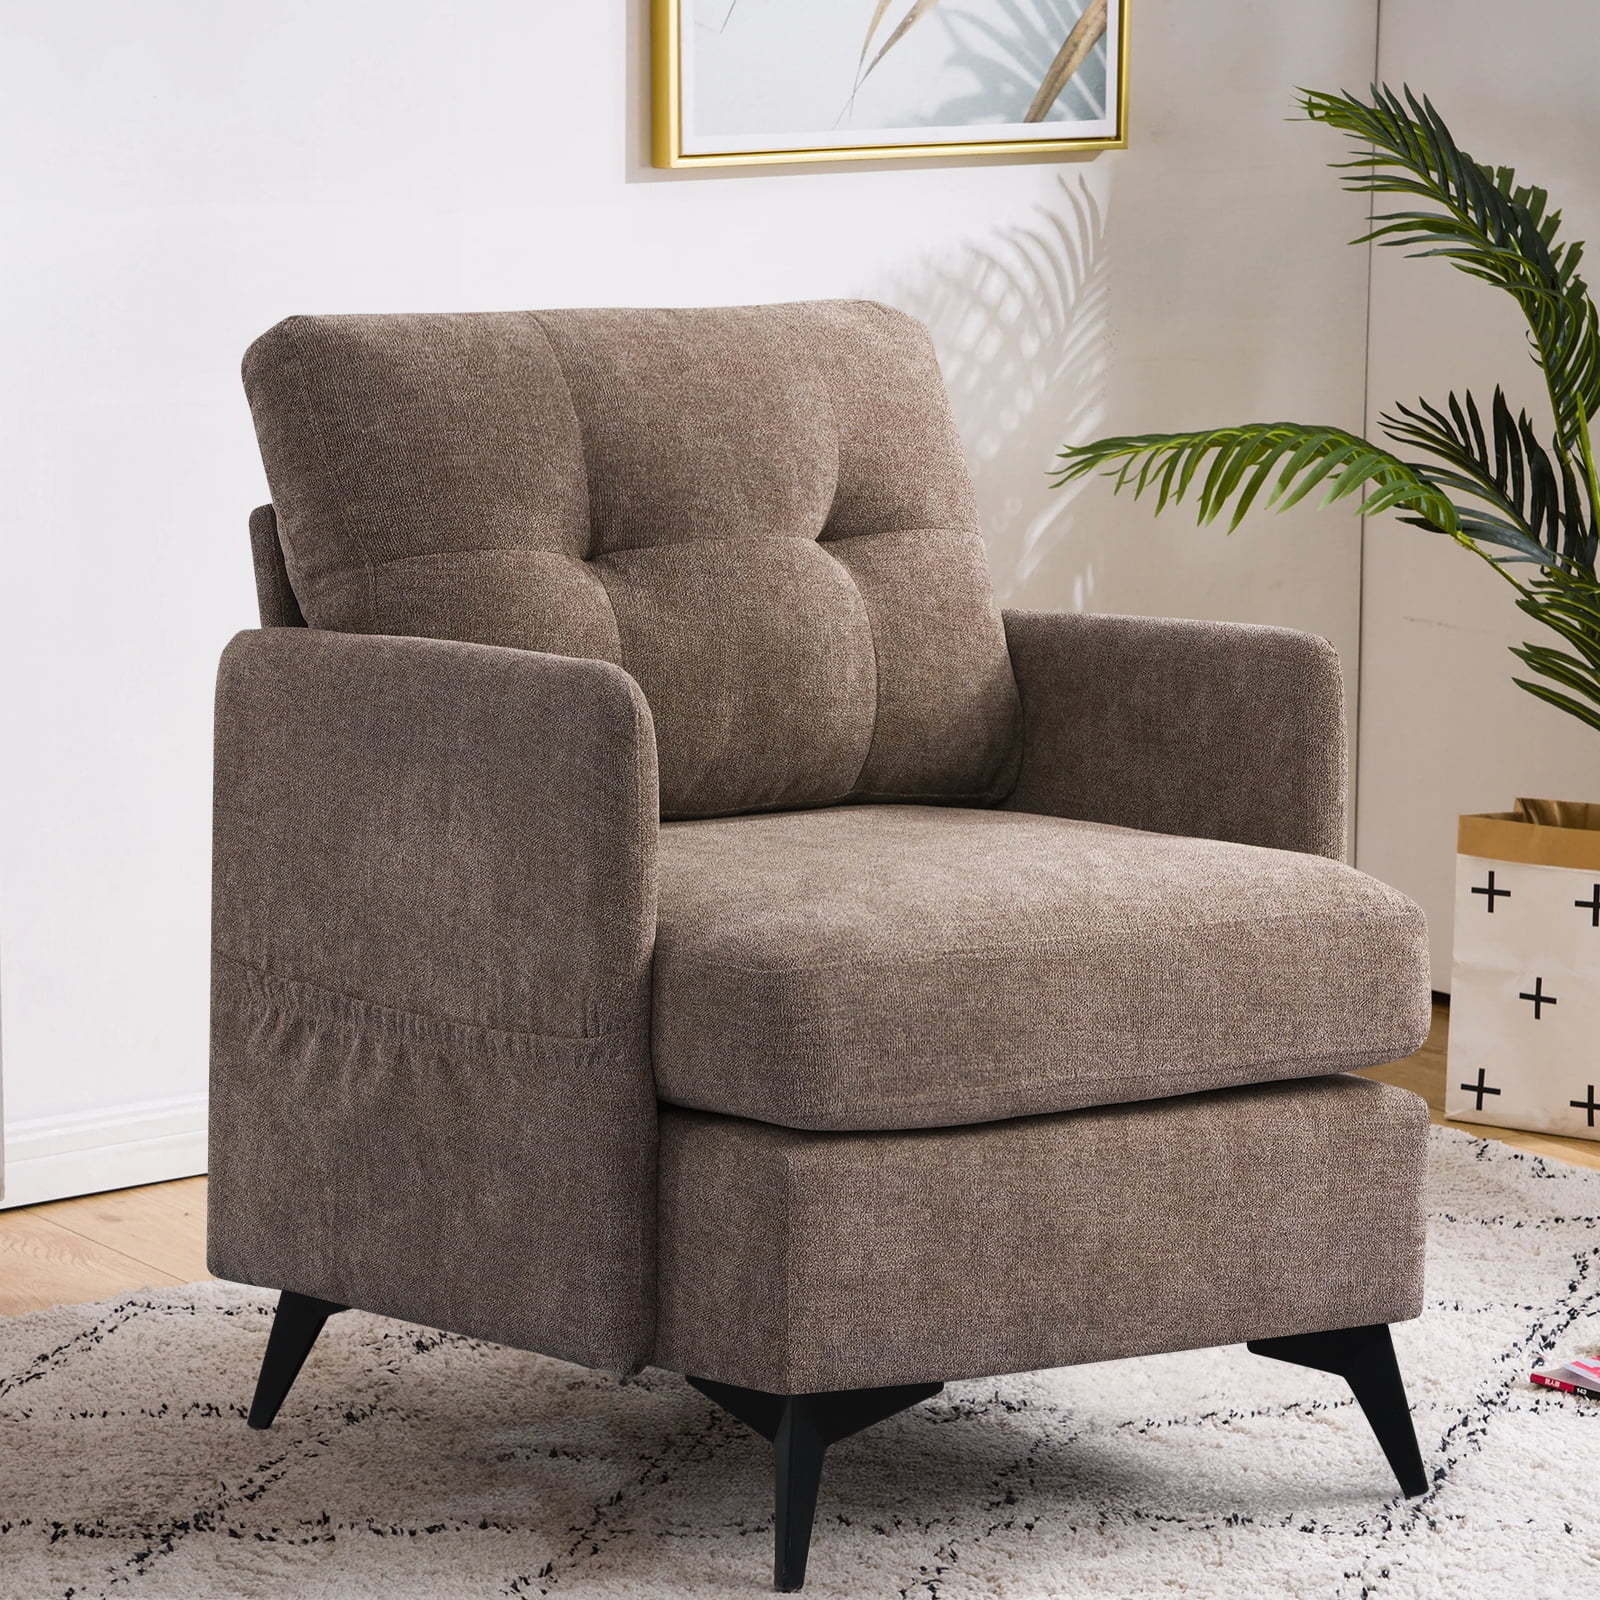 MBBMW Modern Upholstered Accent Chair Armchair, Linen Living Room Chair ...